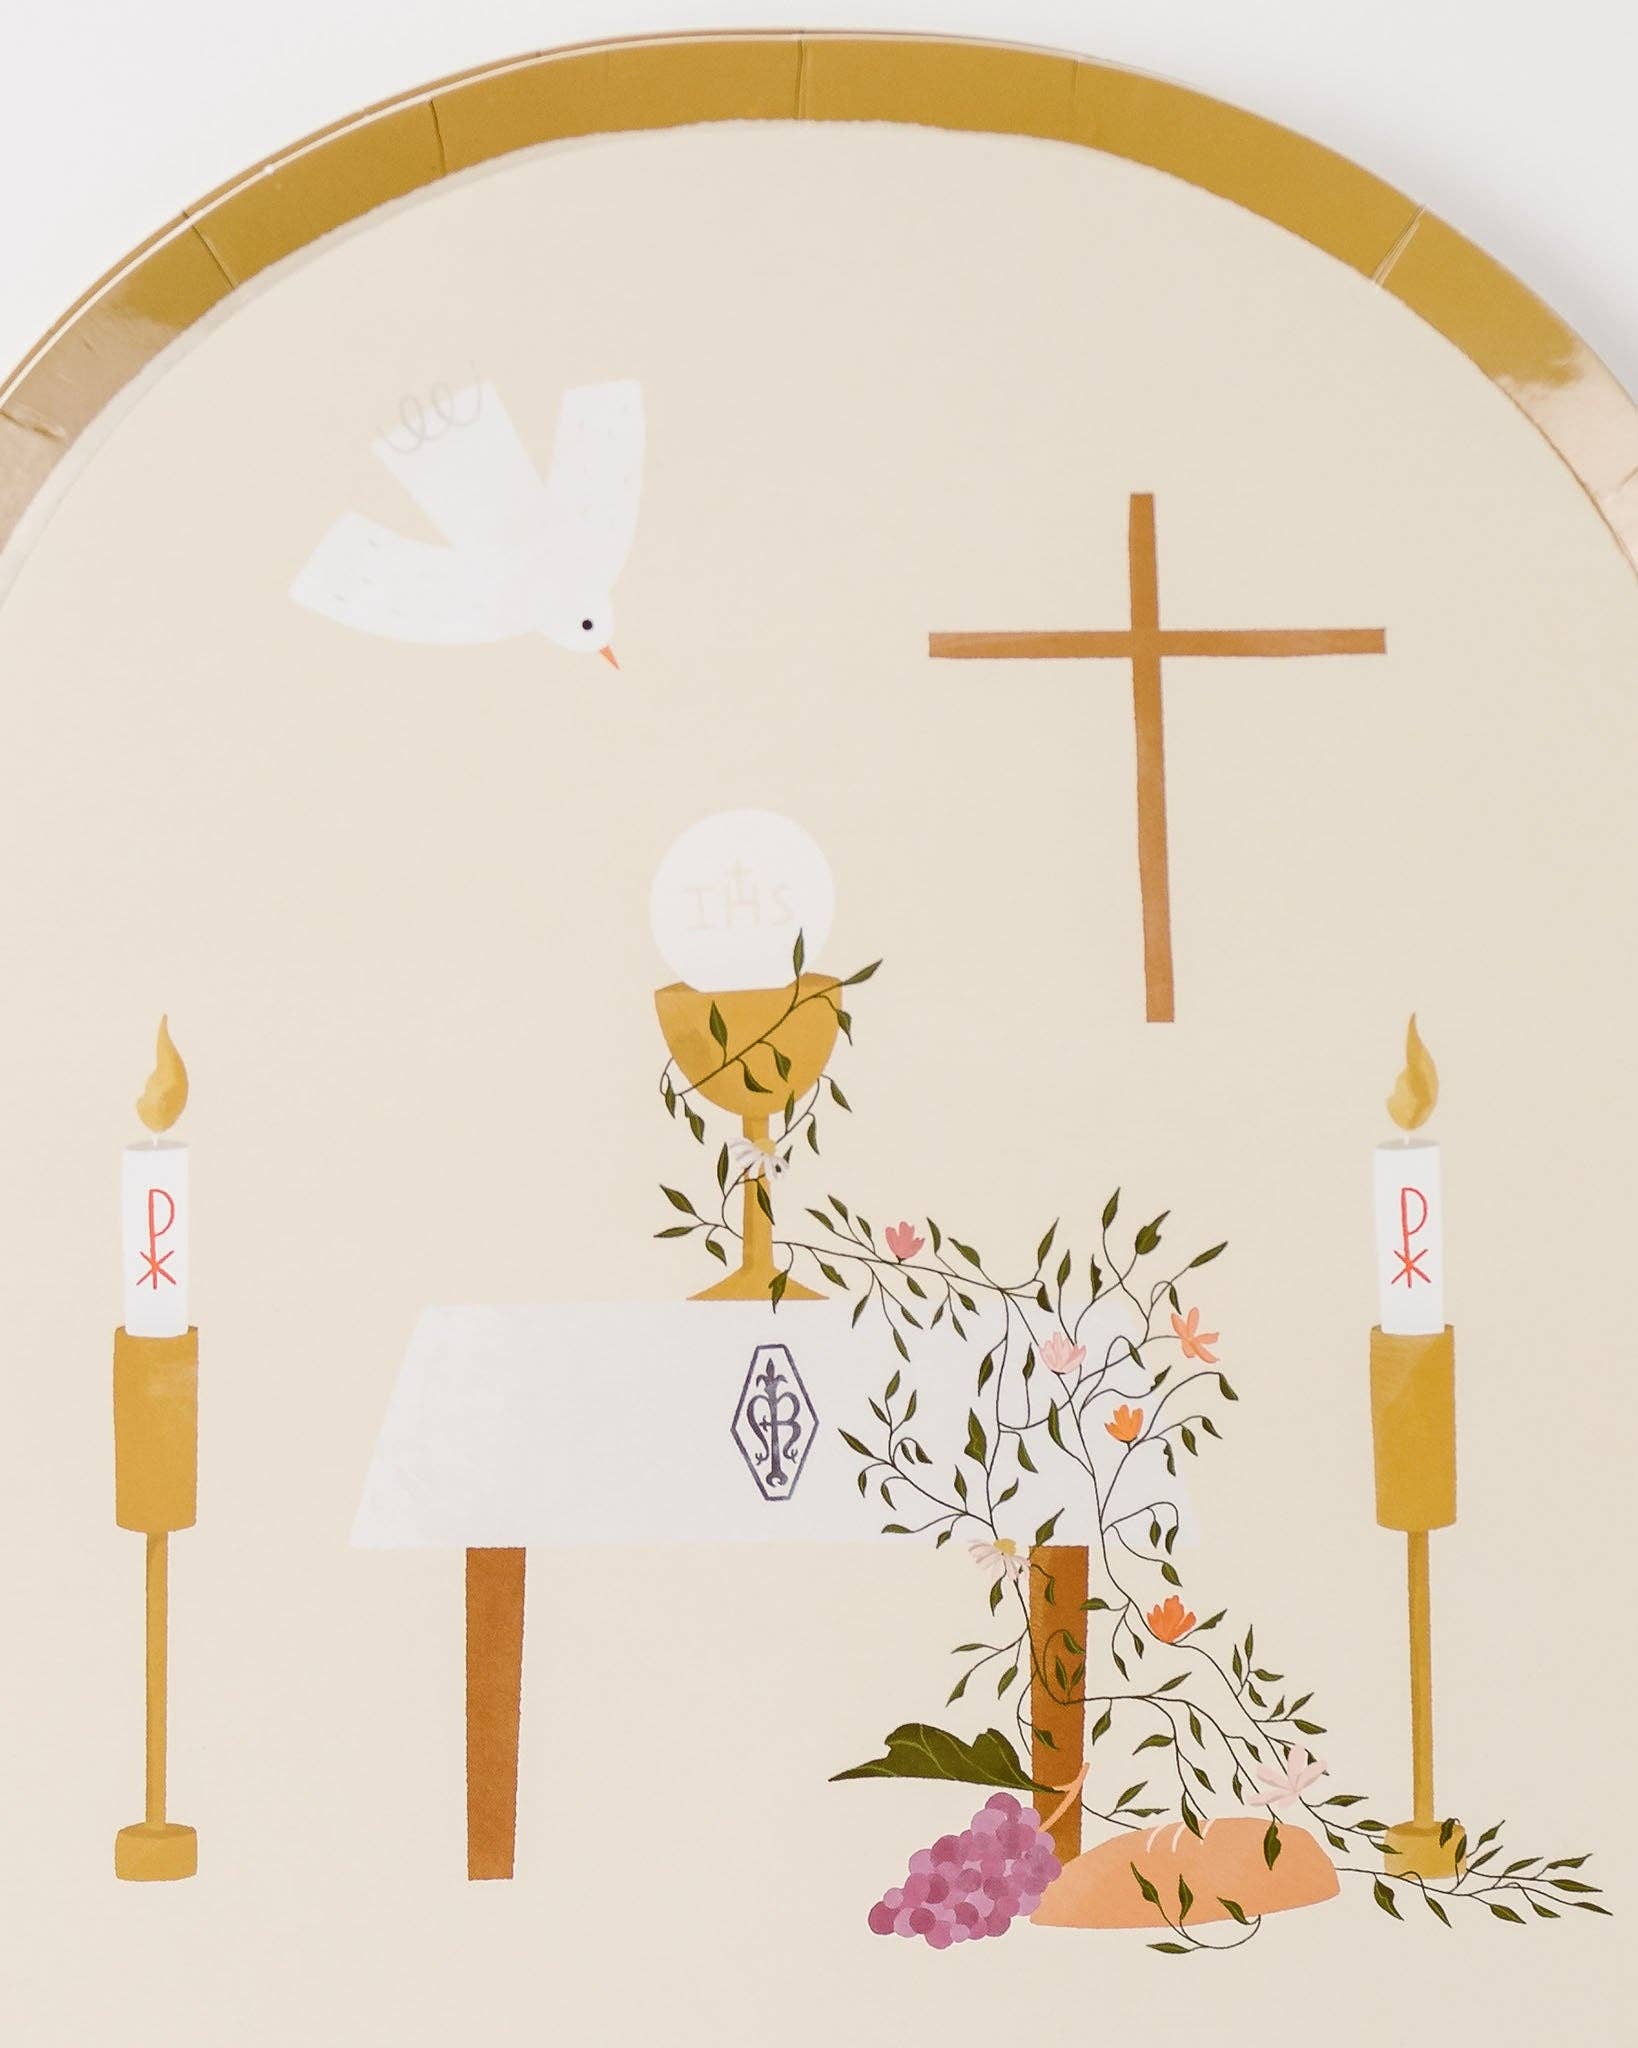 Communion Dinner Plates | Catholic Party Paper Goods